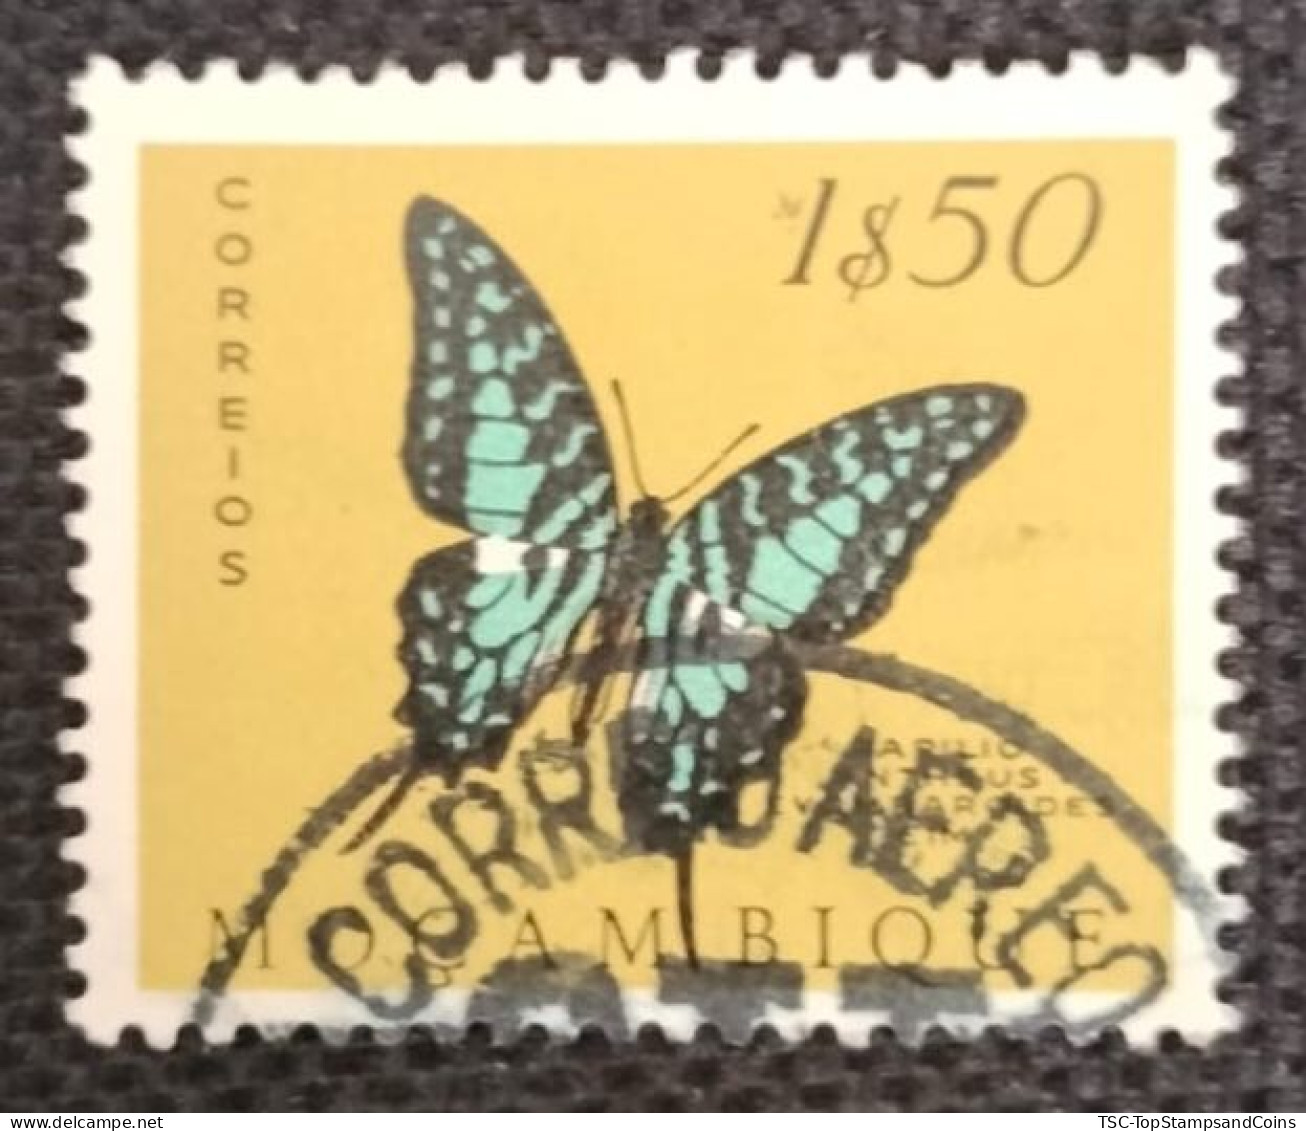 MOZPO0396UE - Mozambique Butterflies  - 1$50 Used Stamp - Mozambique - 1953 - Mozambique